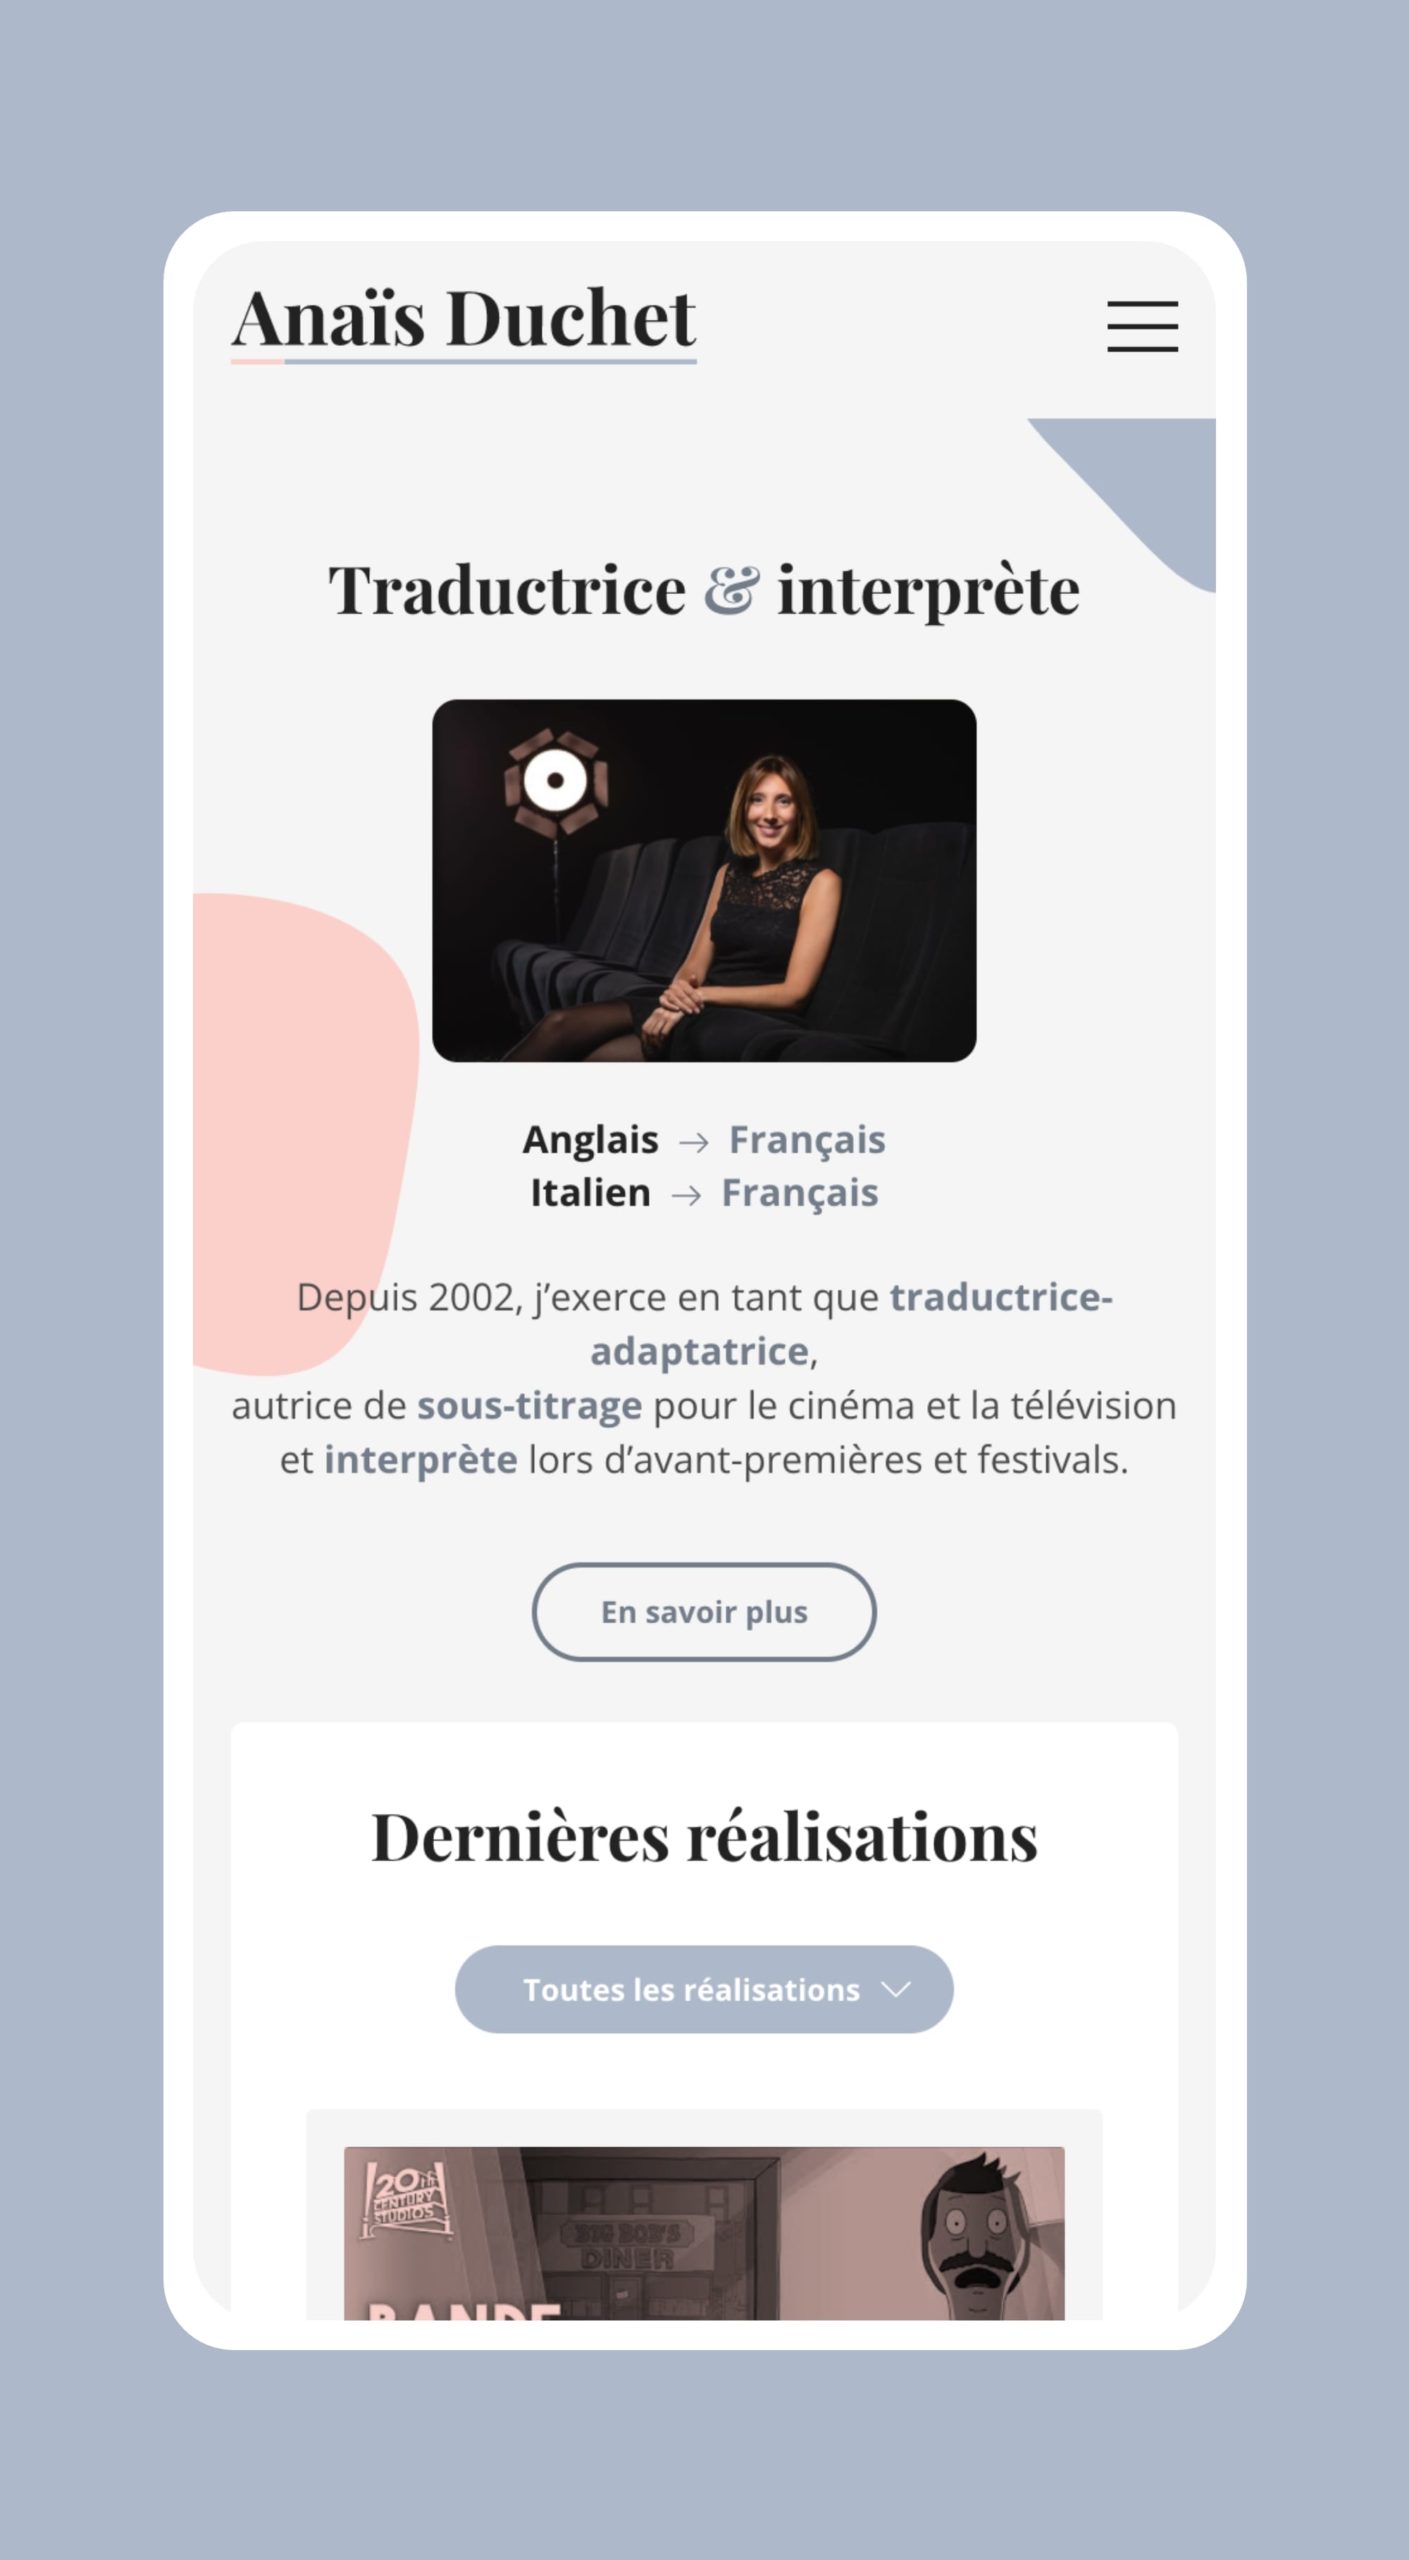 idizbox - digital & print - Anaïs Duchet